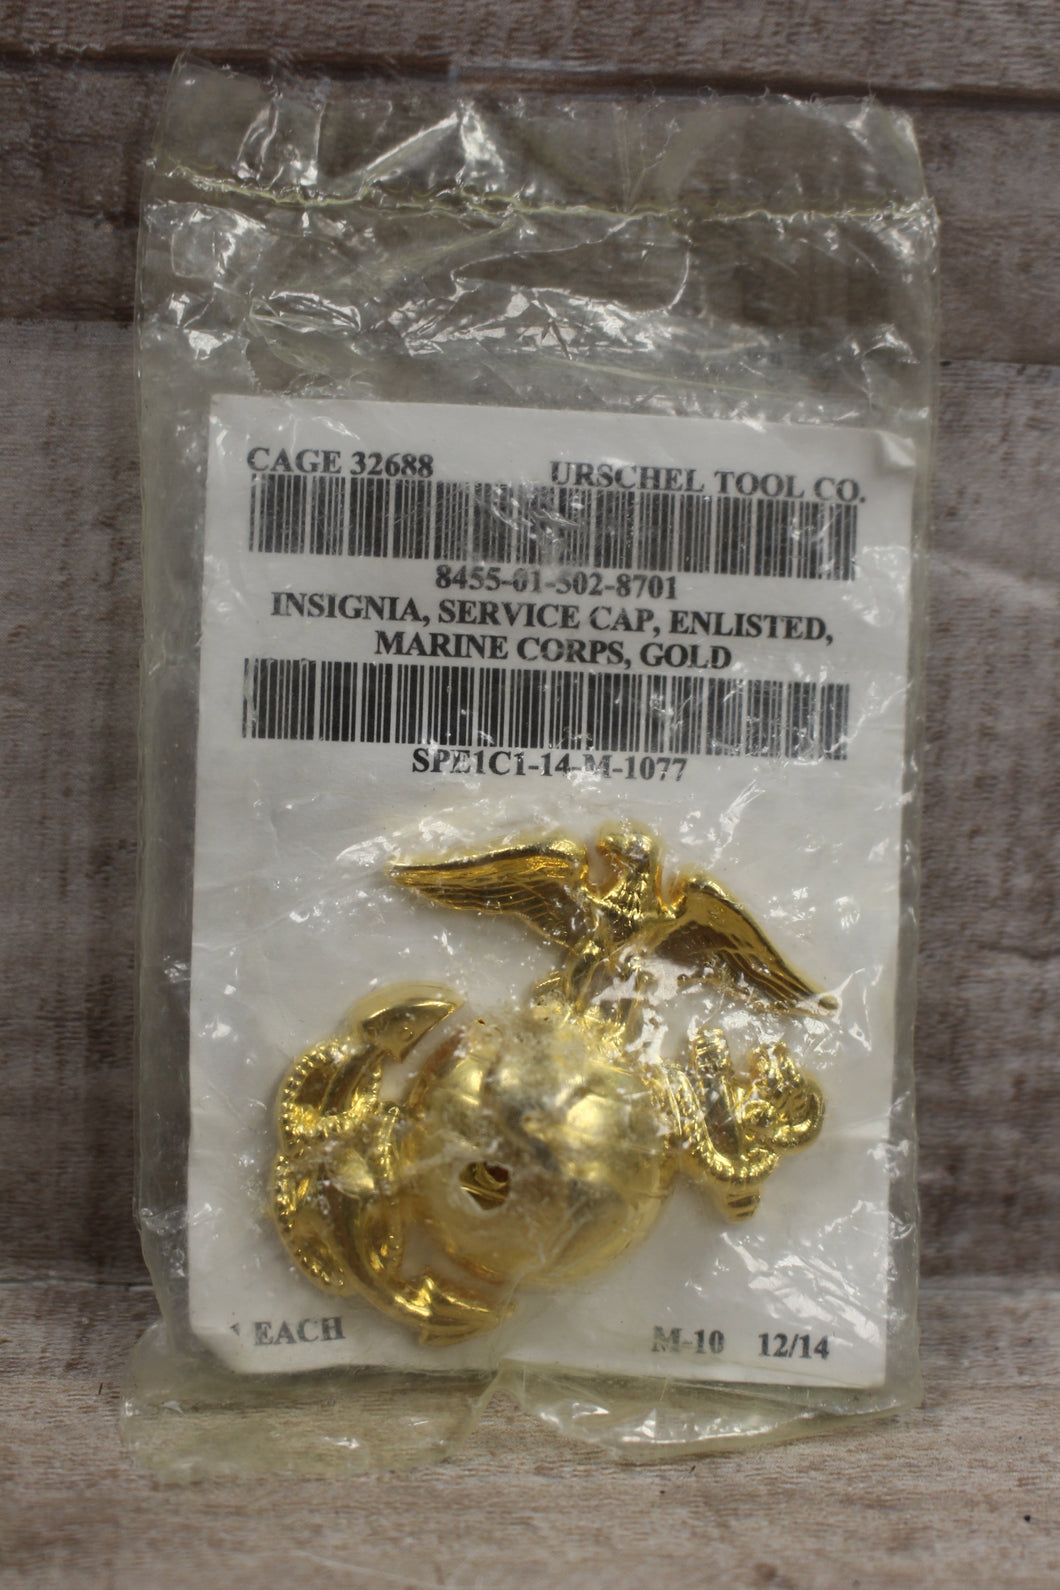 Urschel Tool Company Marine Enlisted Service Cap Insignia Pin -Gold -New